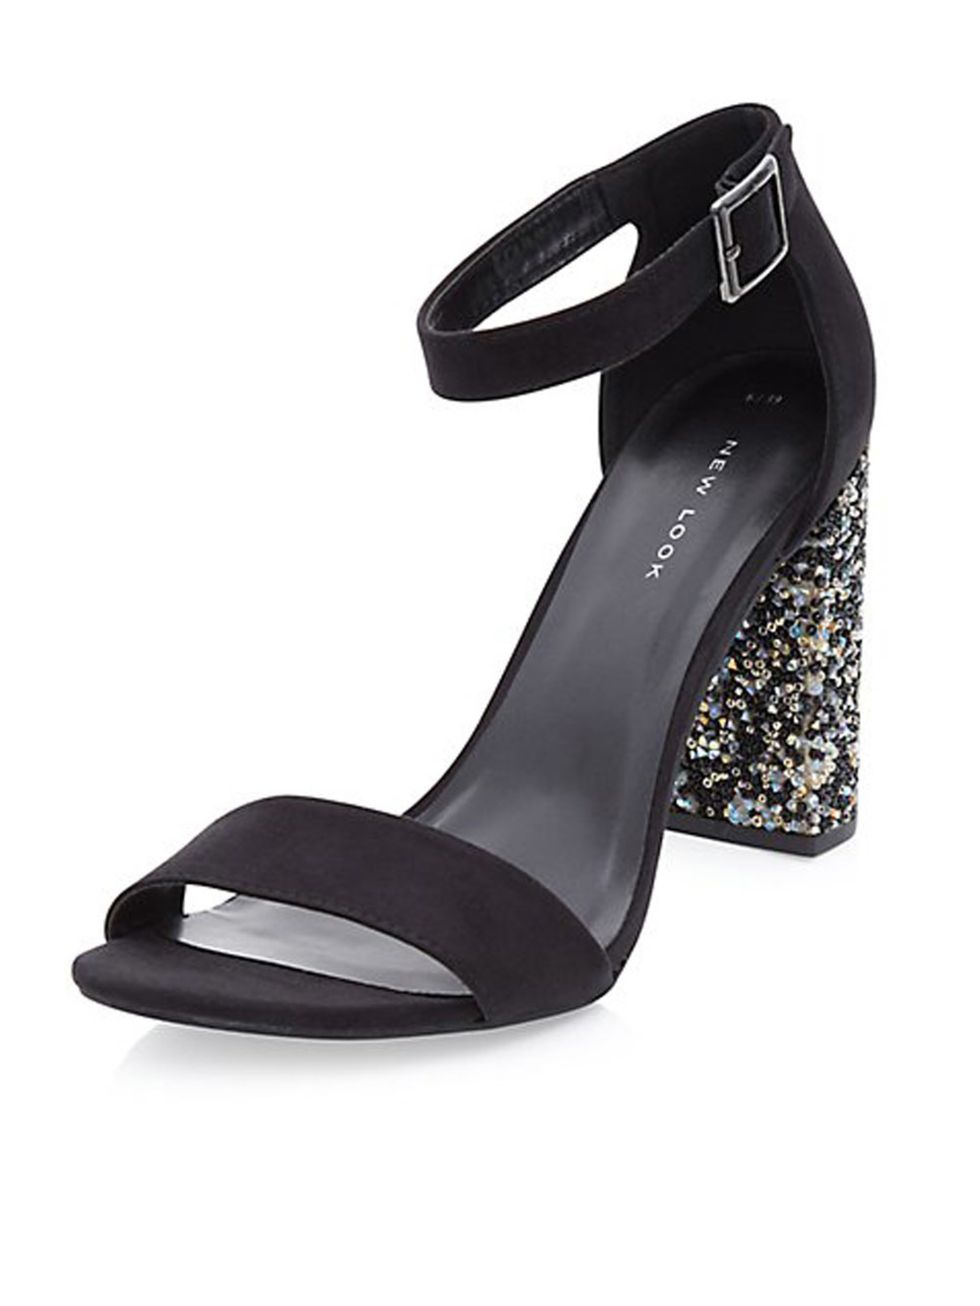 High heels, Basic pump, Sandal, Black, Beige, Court shoe, Bridal shoe, Leather, Foot, Silver, 